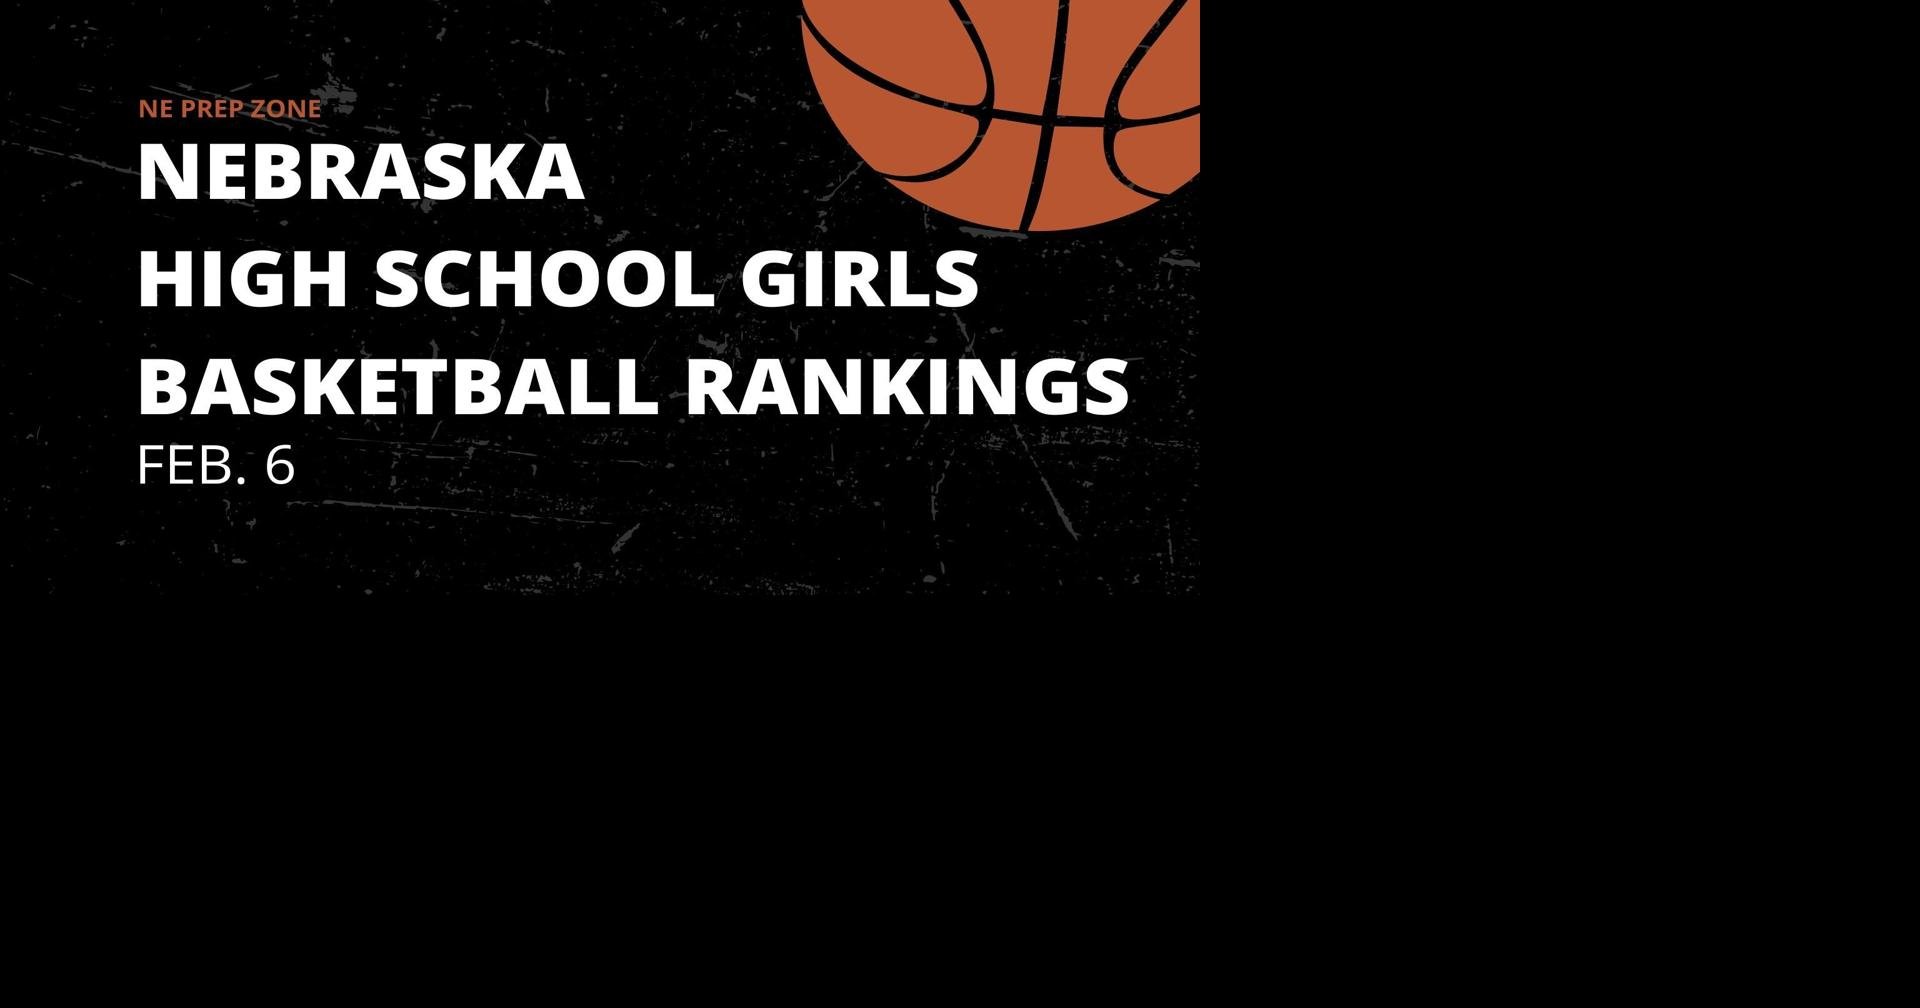 Nebraska high school girls basketball rankings, Feb. 6